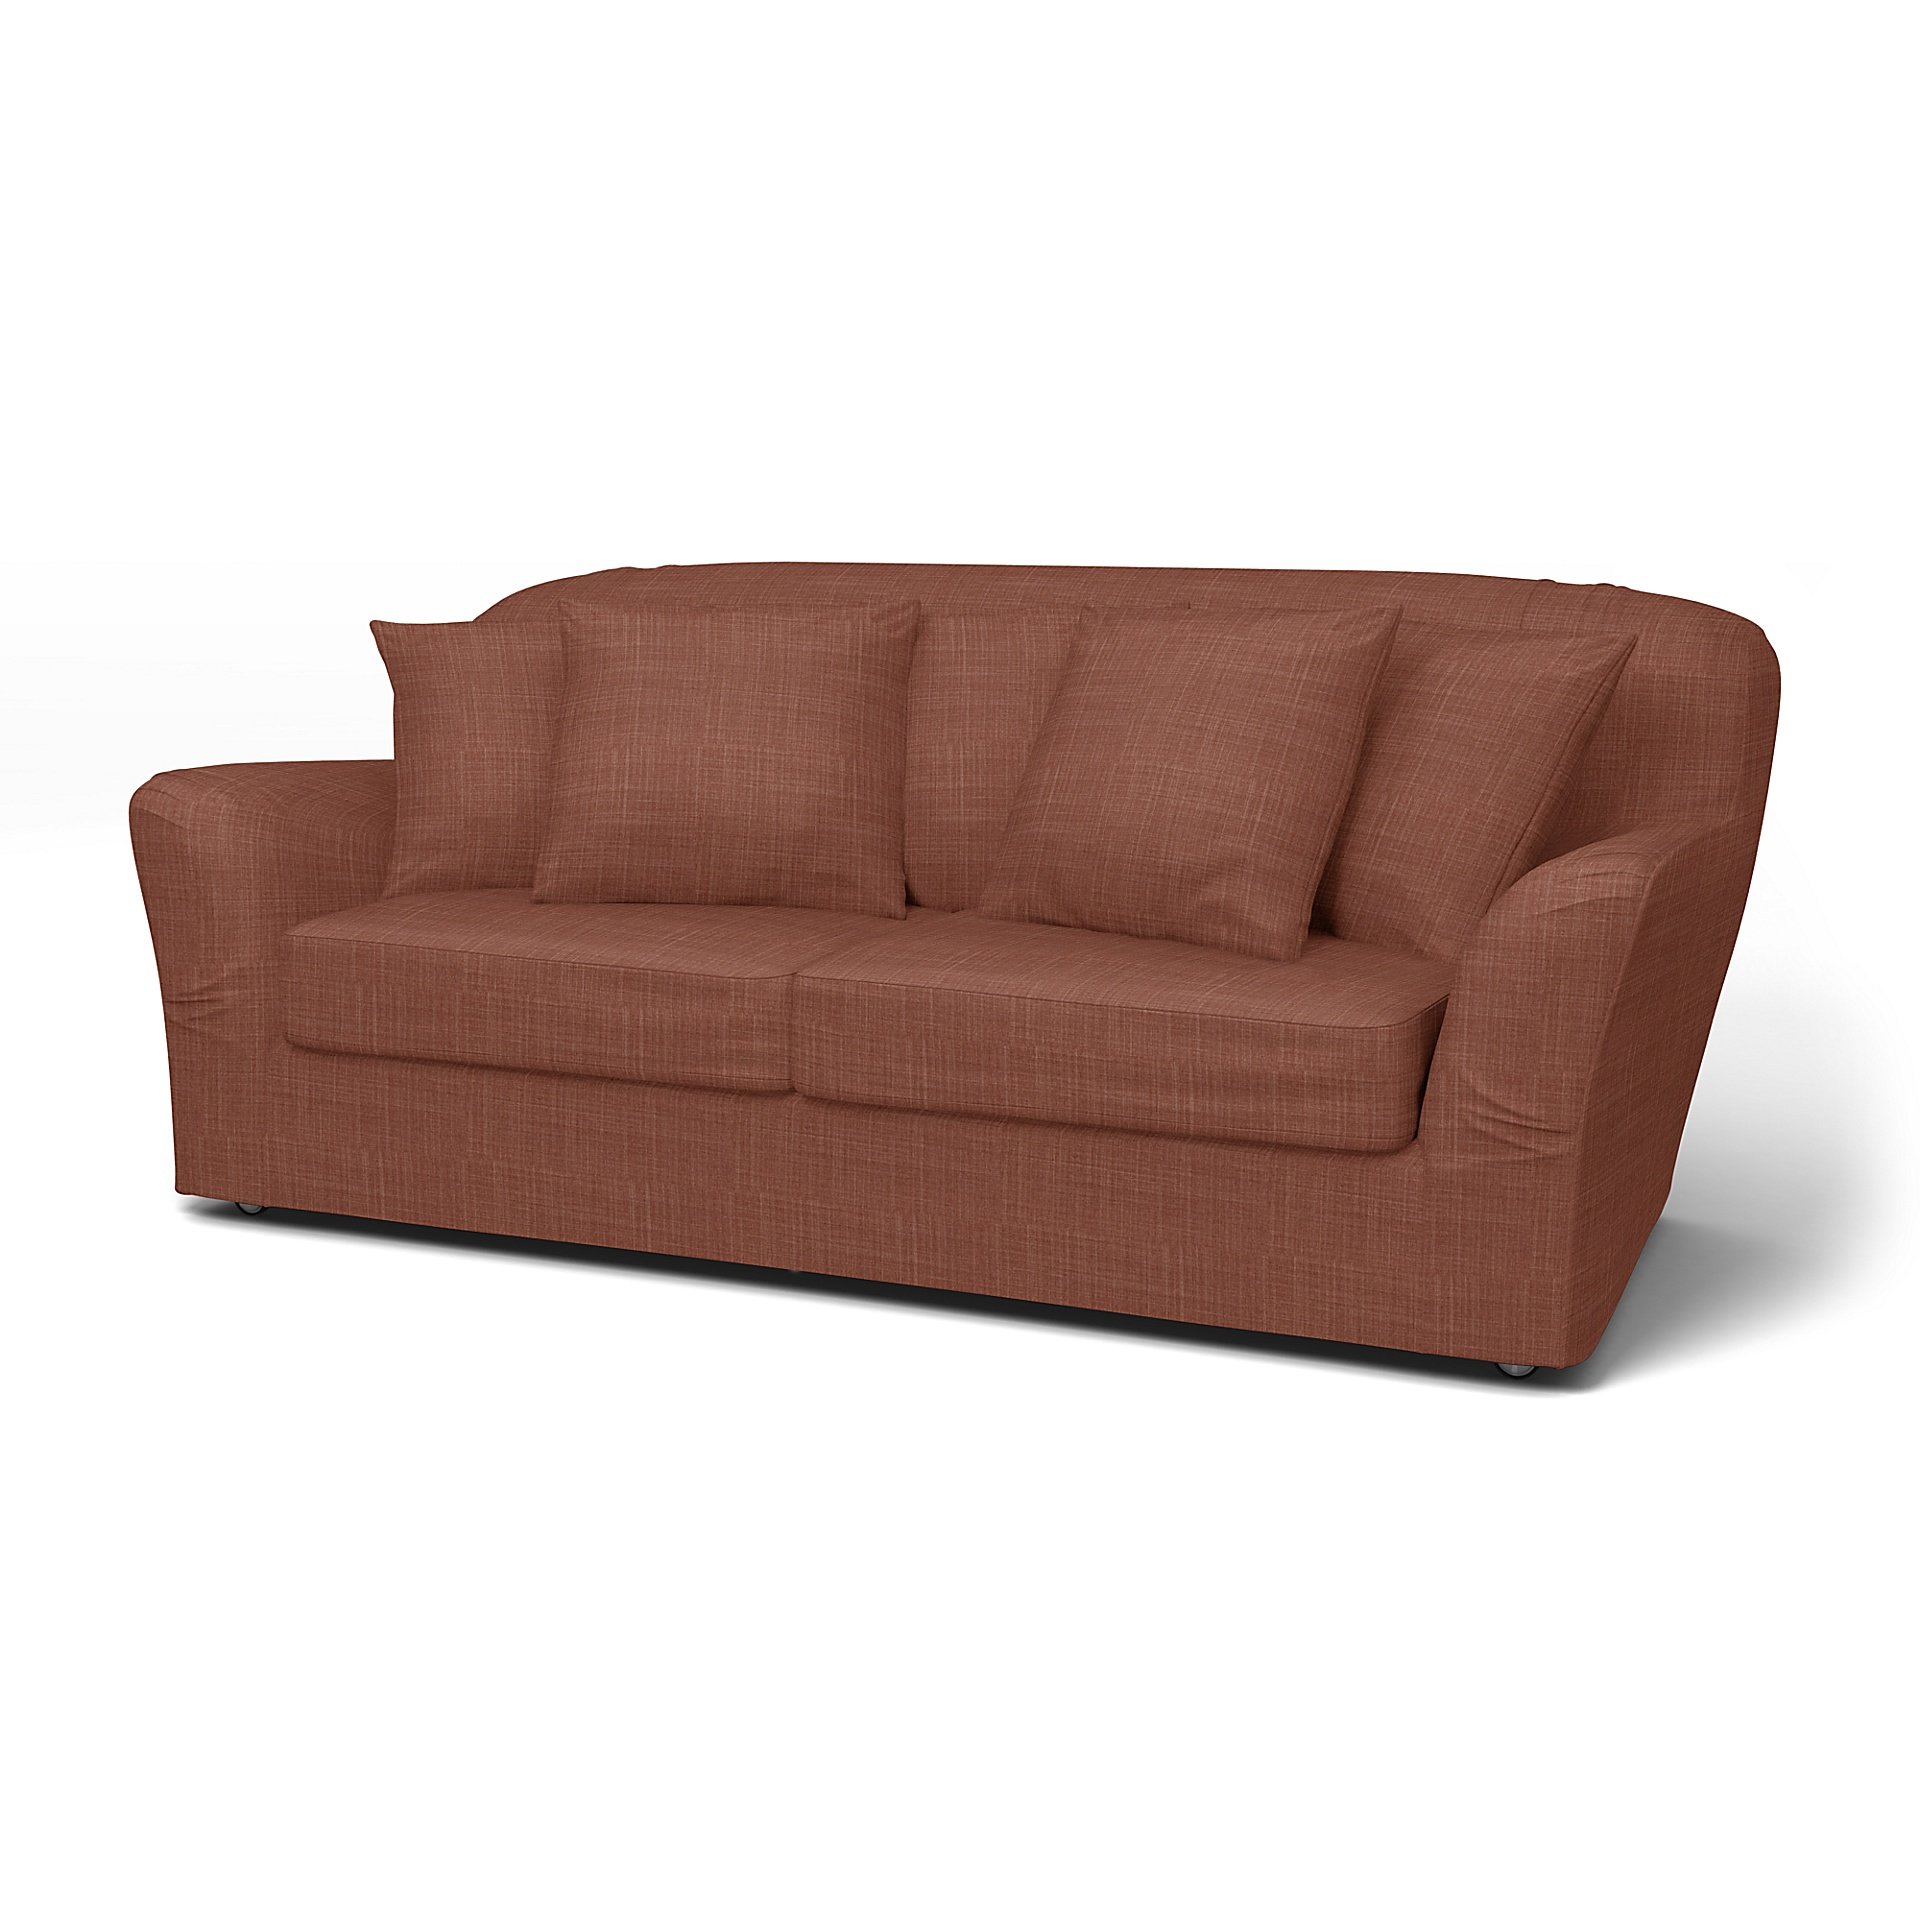 IKEA - Tomelilla sofa bed (Standard model), Rust, Boucle & Texture - Bemz